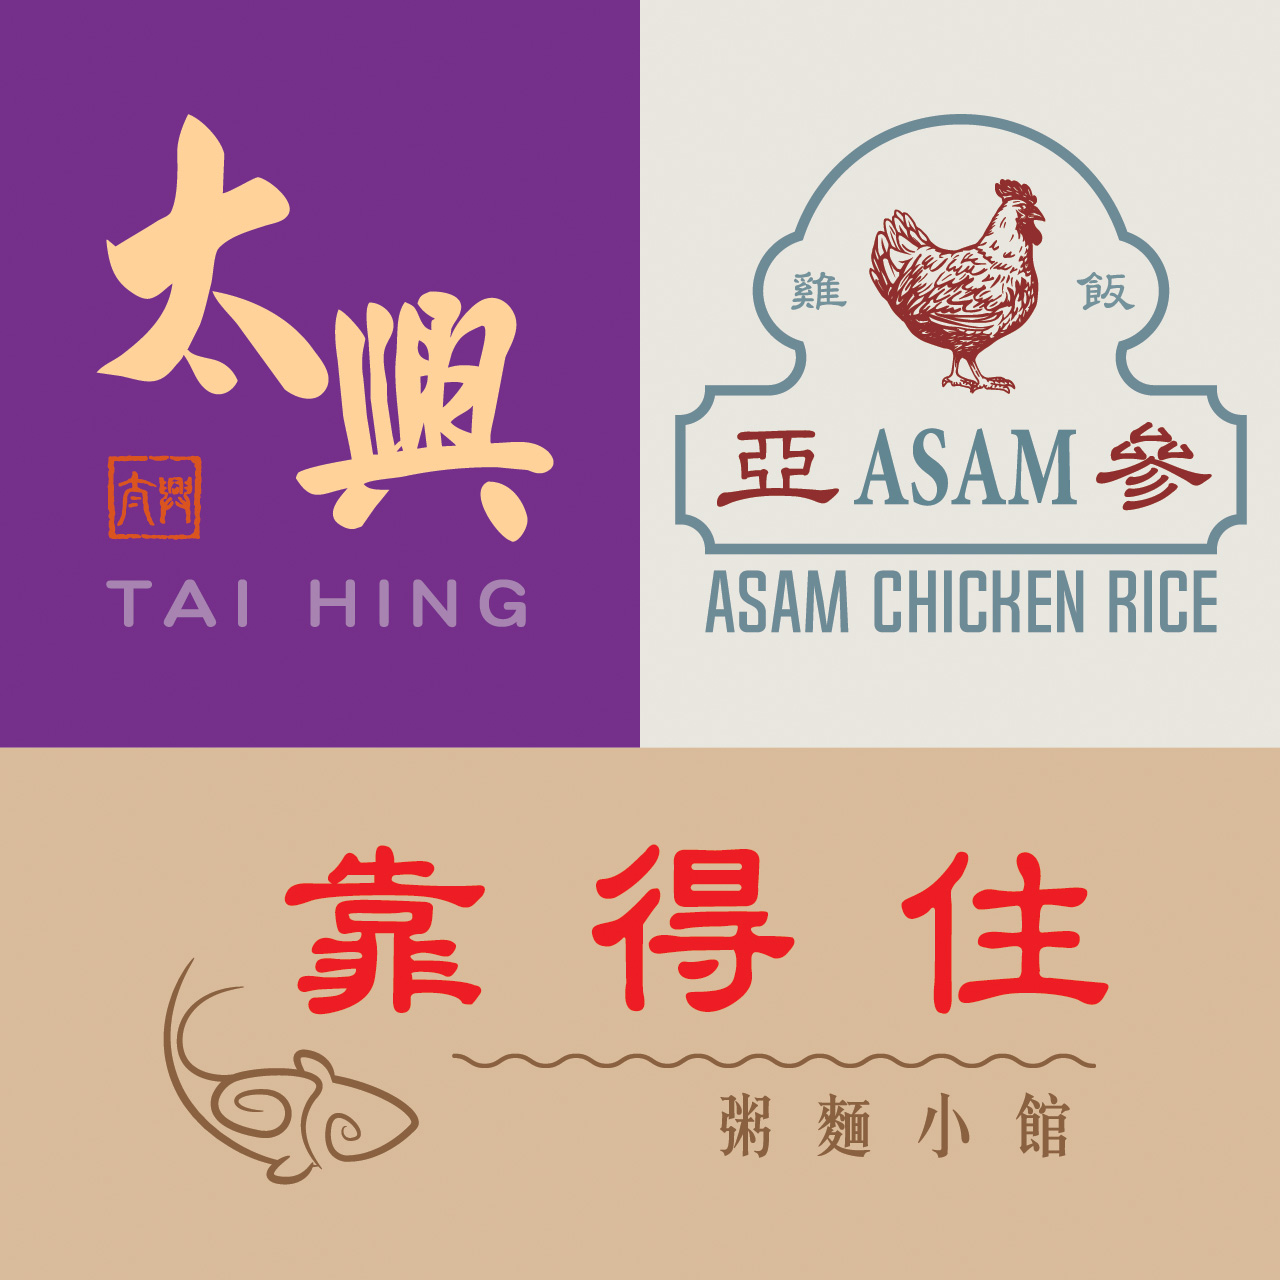 Tai Hing, 靠得住, Asam Chicken Rice